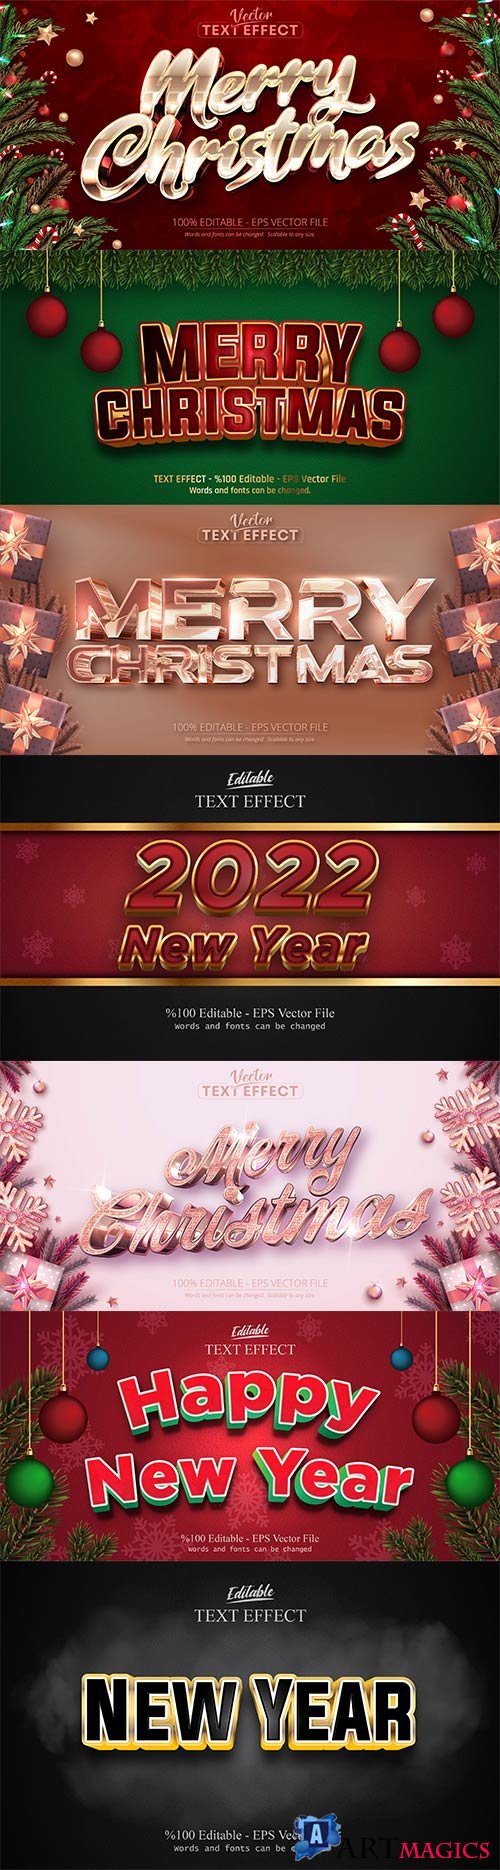 2022 New year, Merry christmas editable text effect premium vector vol 2